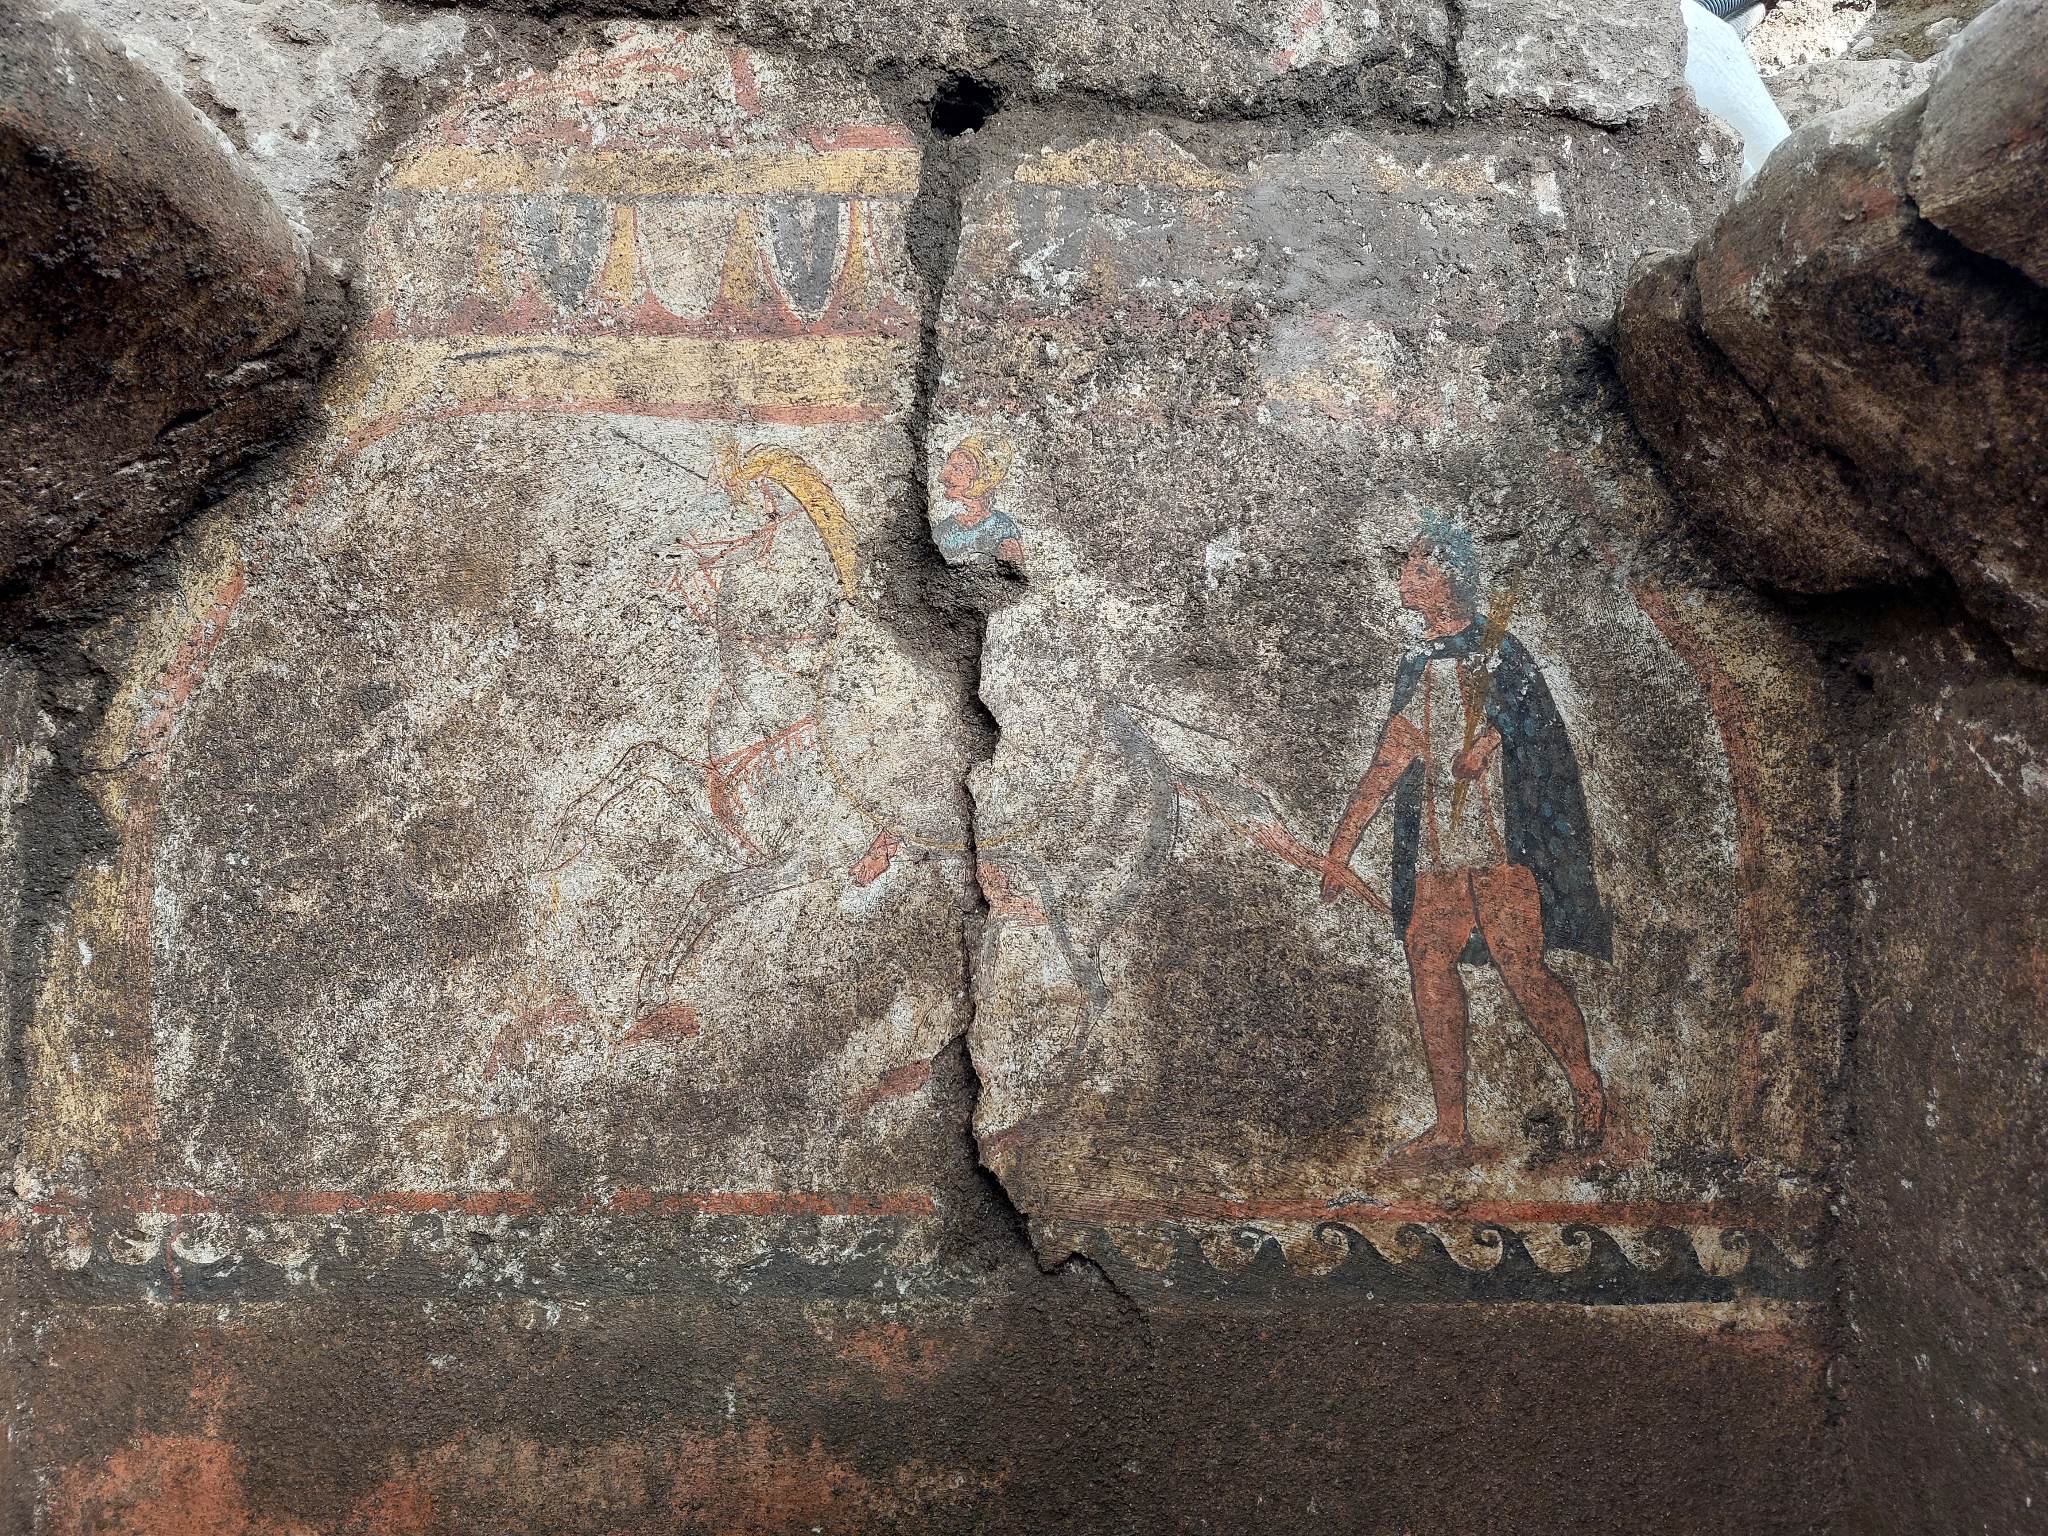 Necropoli di Pontecagnano svela una tomba a camera dipinta: una scoperta archeologica straordinaria